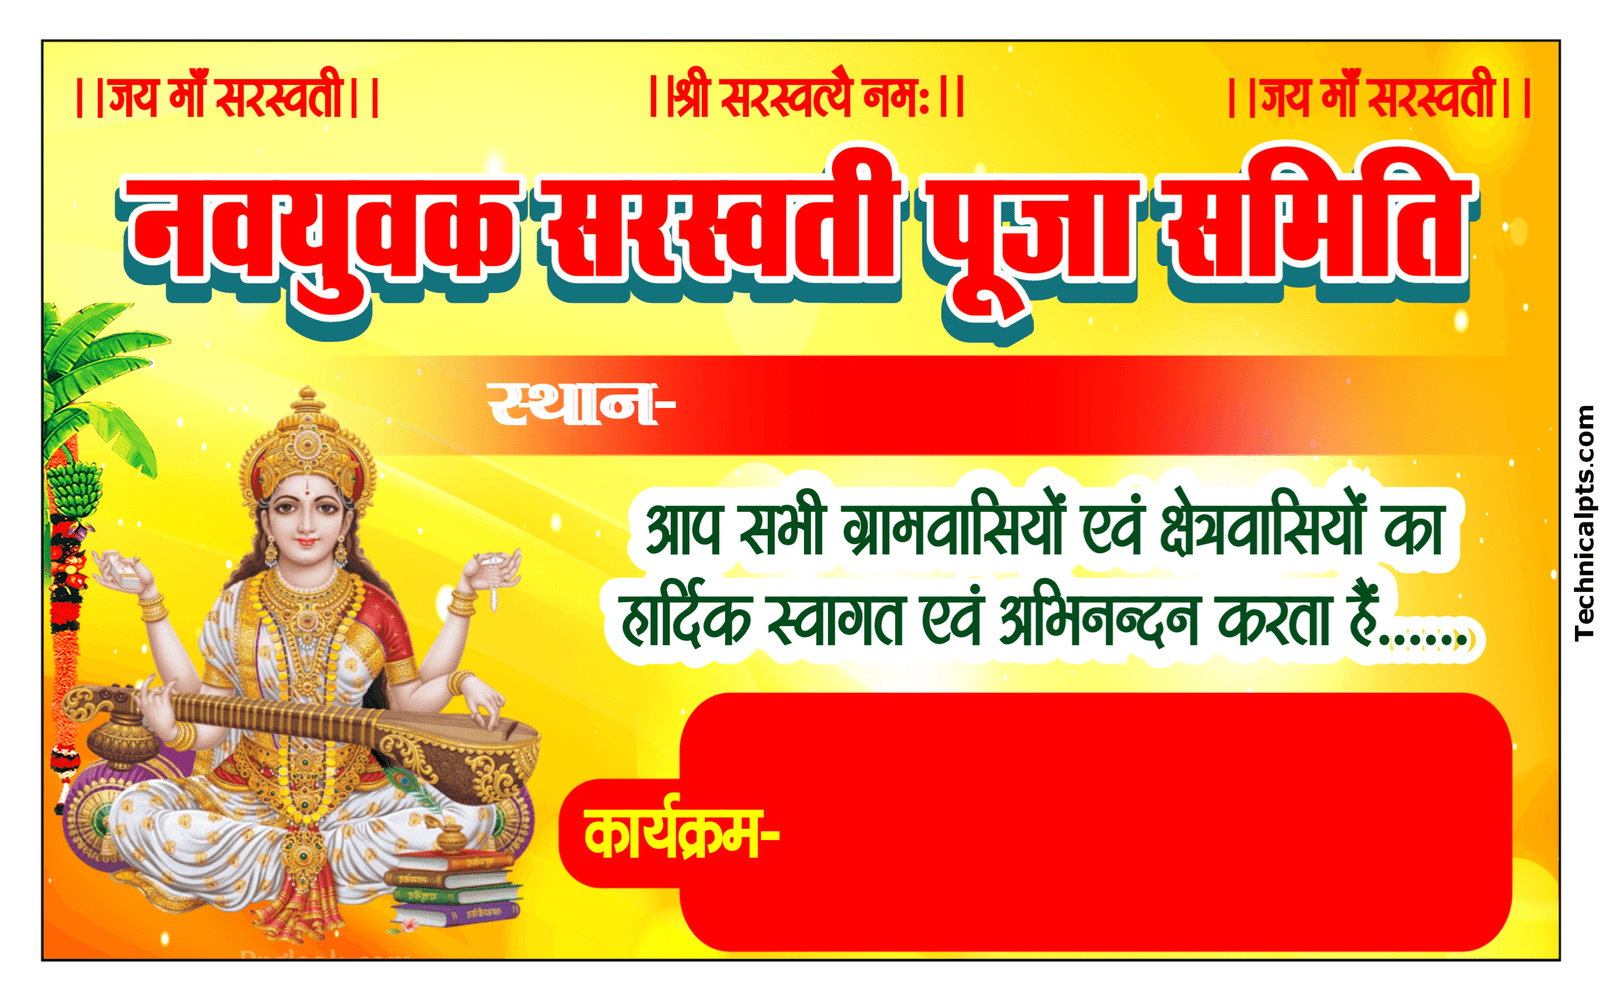 saraswati puja samiti ka poster kaise bananaye mobile se | saraswati puja samiti banner editing in mobile